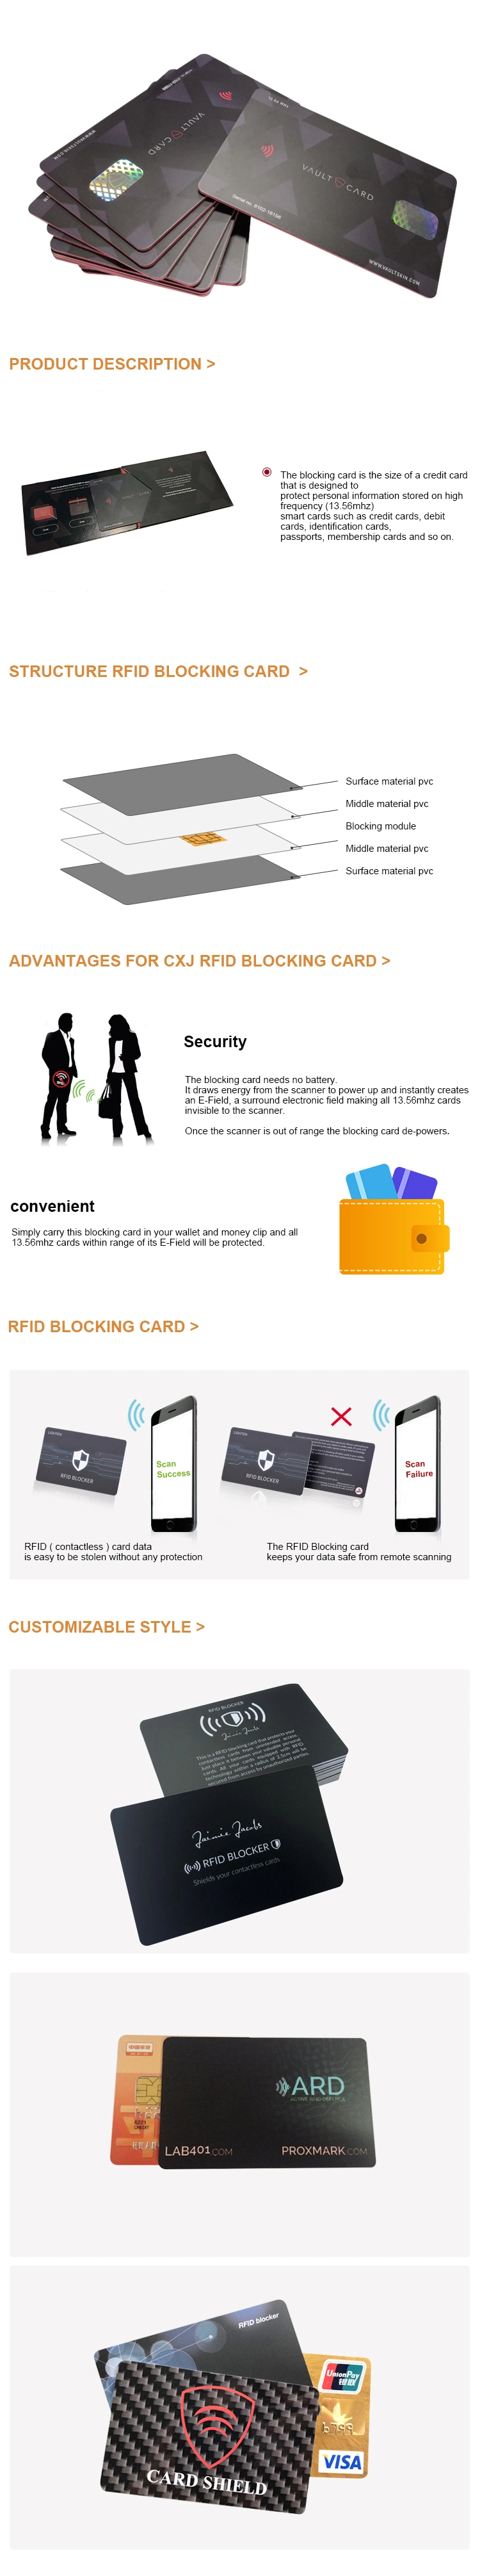 Credit Card, Bank Card, Debit Card Protection NFC Blocking Card